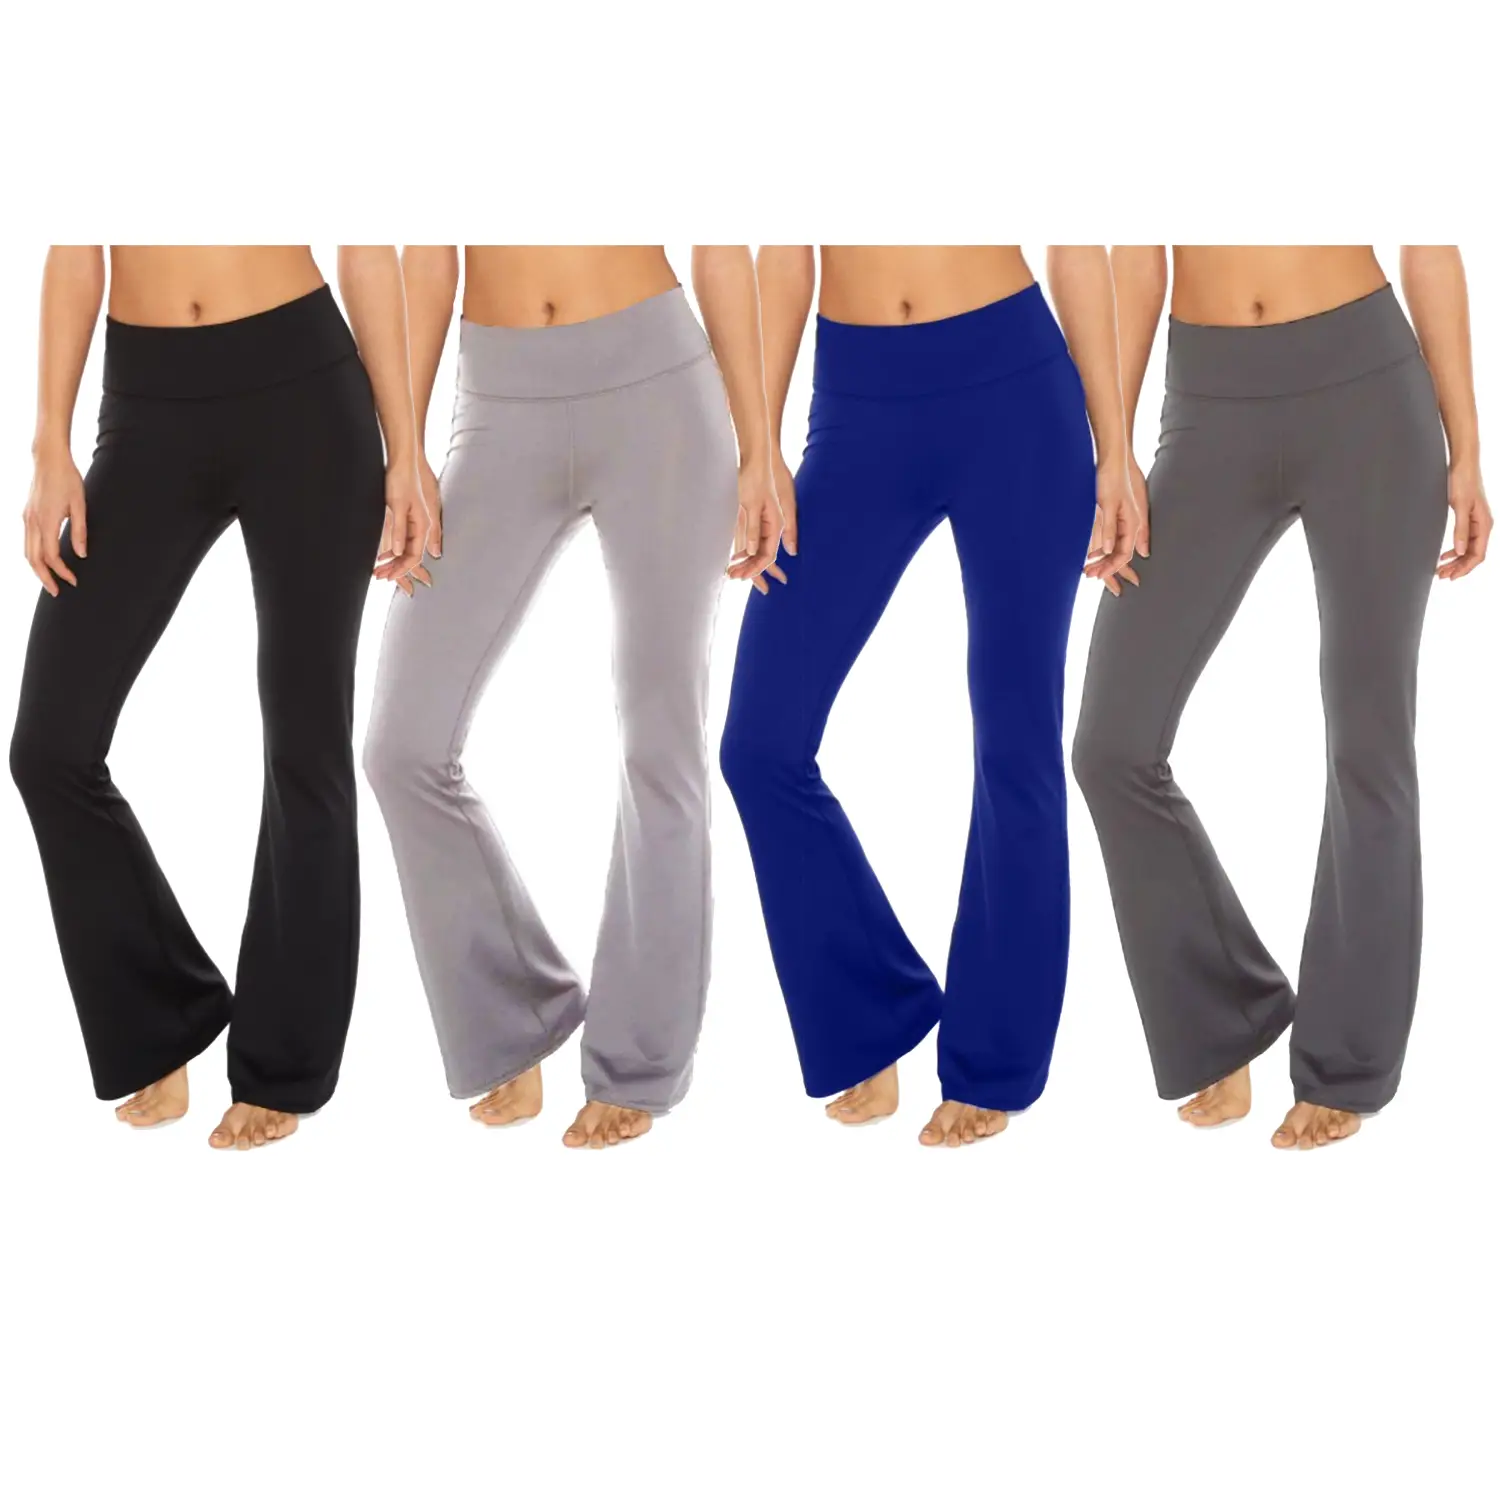 3-Pack Assorted Women's Stretch High Waist Tummy Control Yoga Performance Running Pants